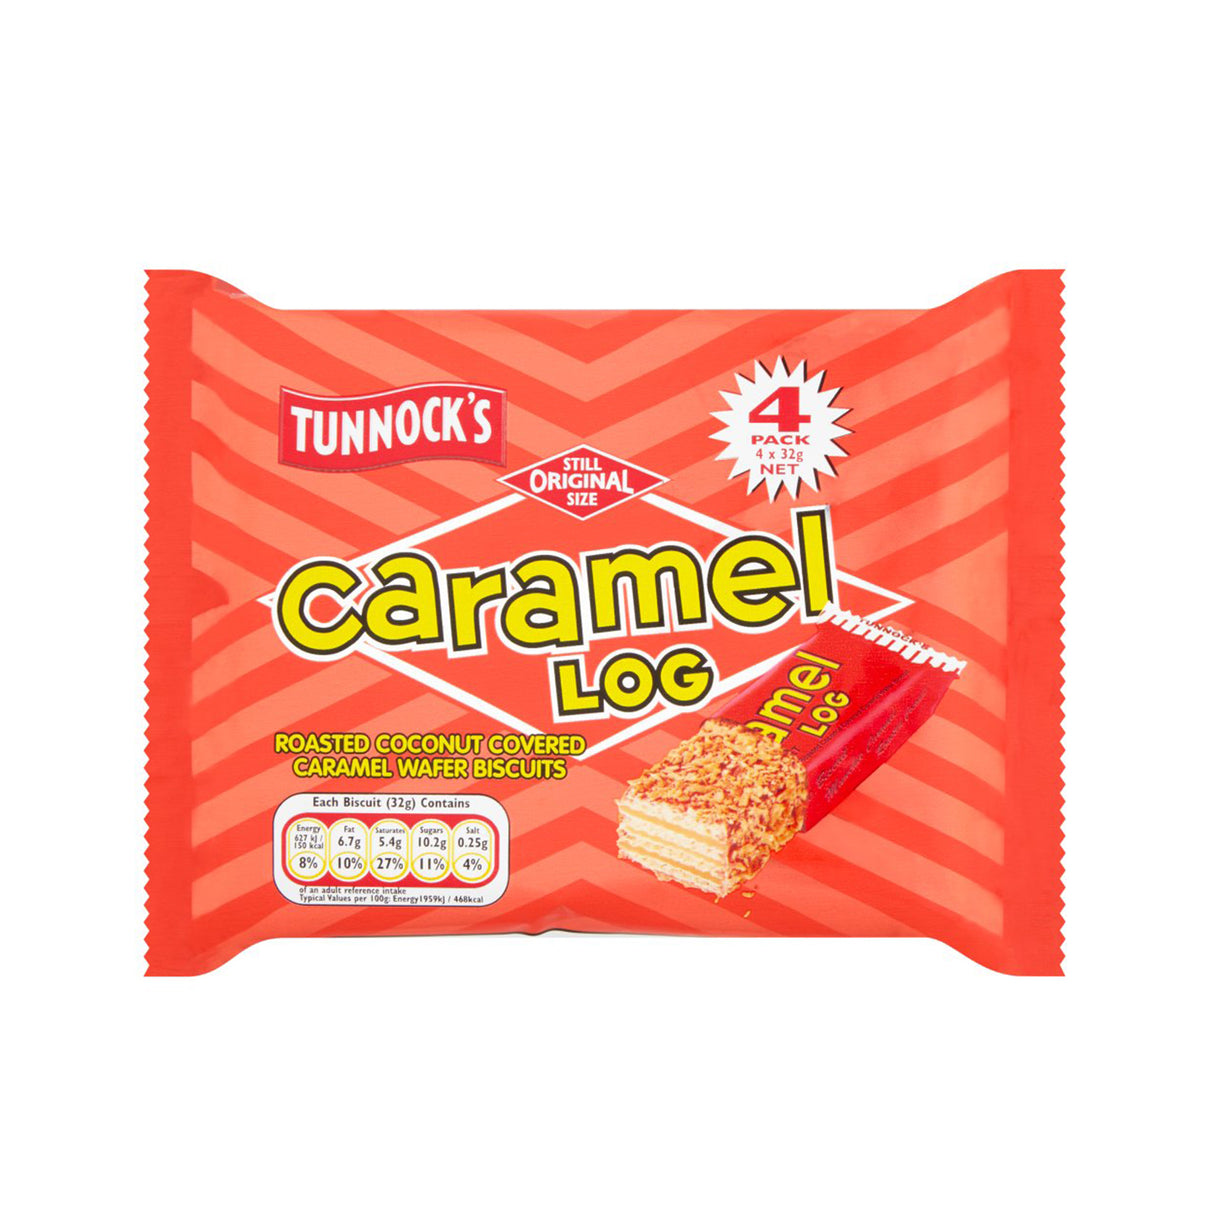 Tunnock's Caramel Log 32g - 4 Pack